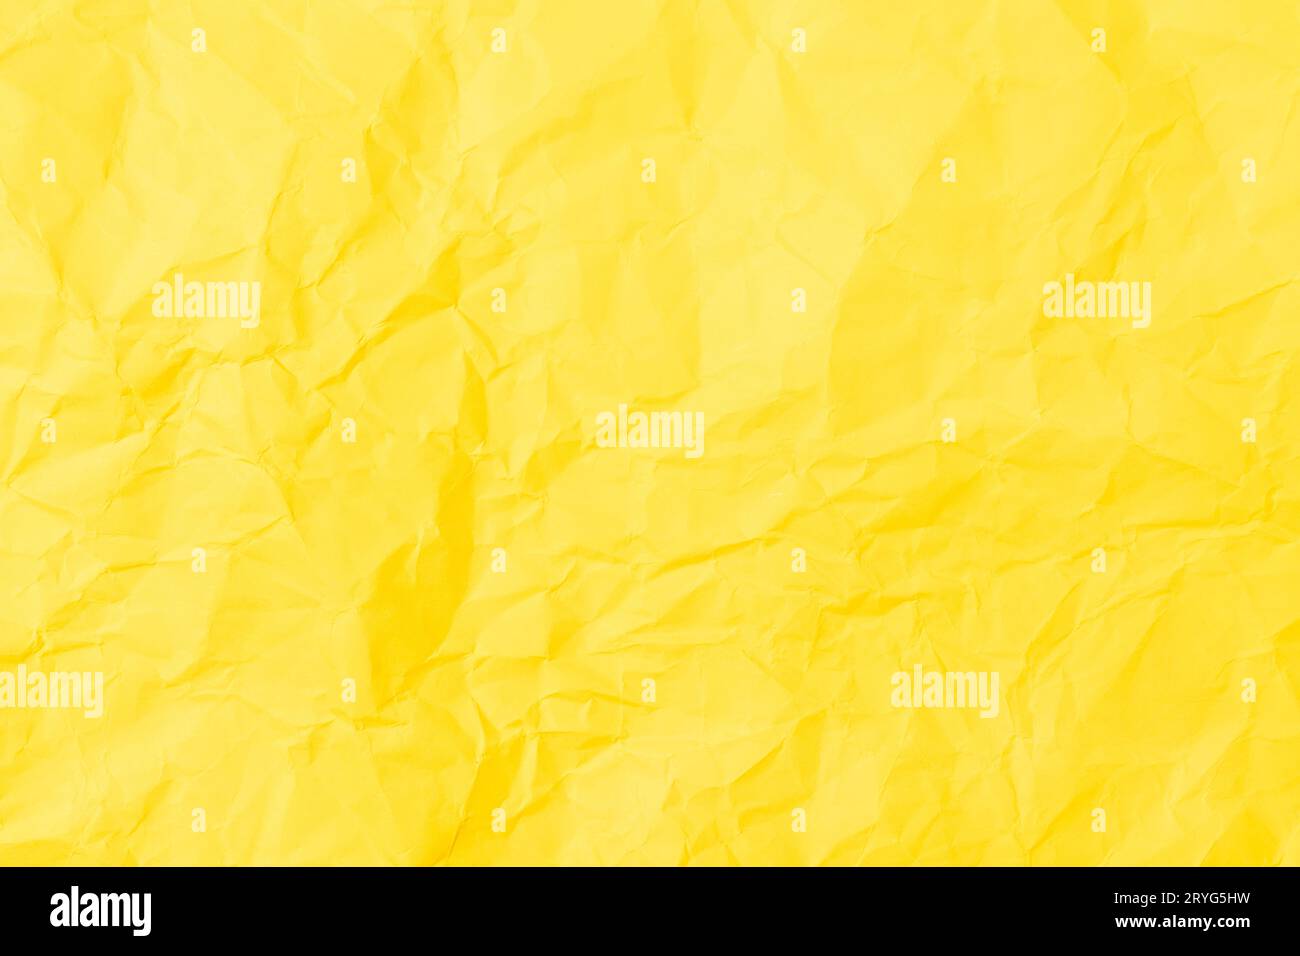 https://c8.alamy.com/comp/2RYG5HW/yellow-crumpled-paper-background-texture-full-frame-2RYG5HW.jpg